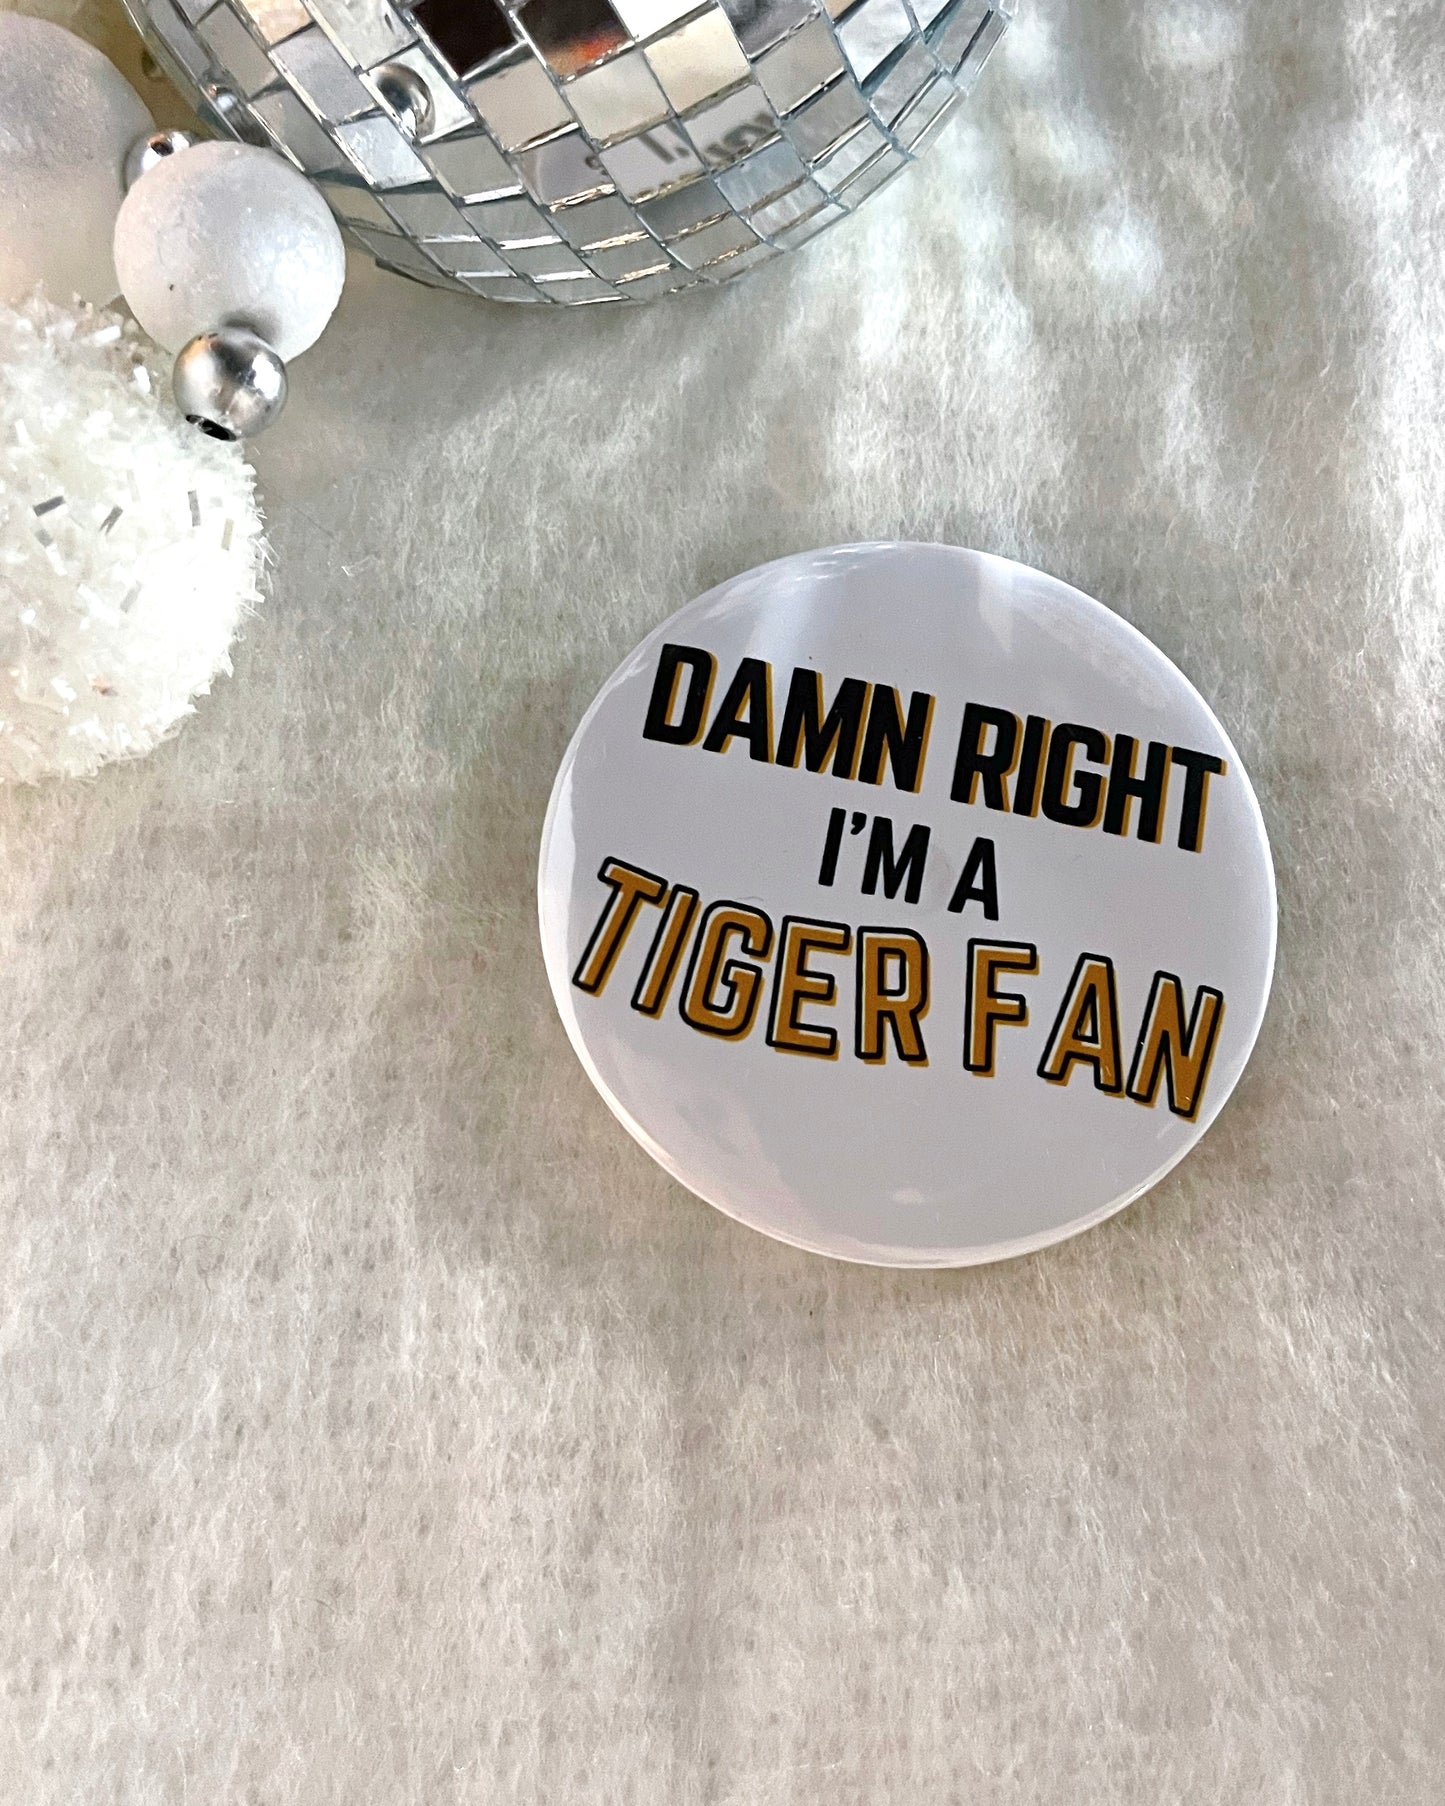 Damn Right I'm a Tiger Fan Button